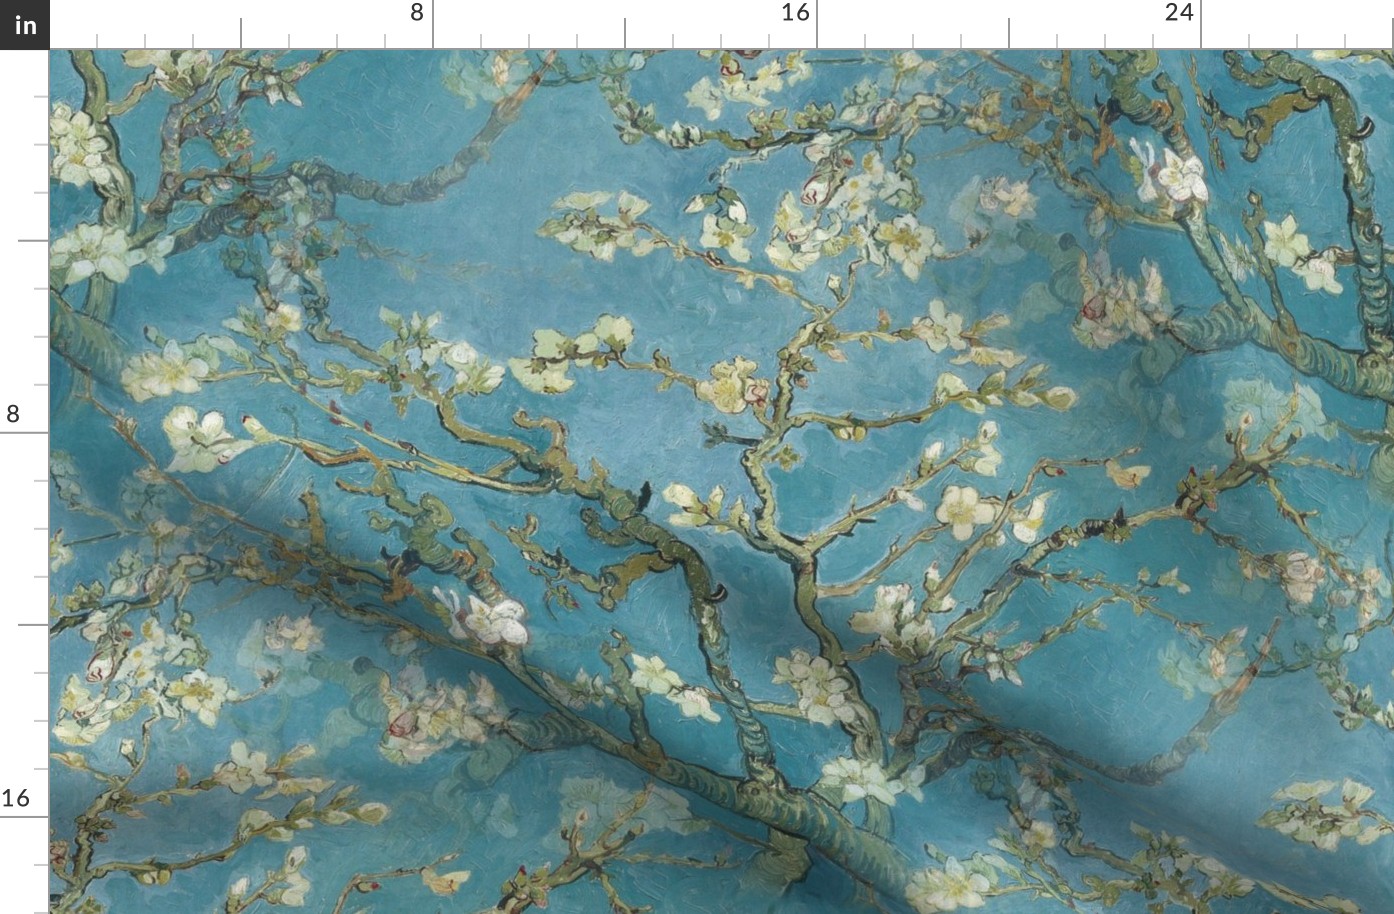 1890 Almond Blossoms by Van Gogh - Original Colors